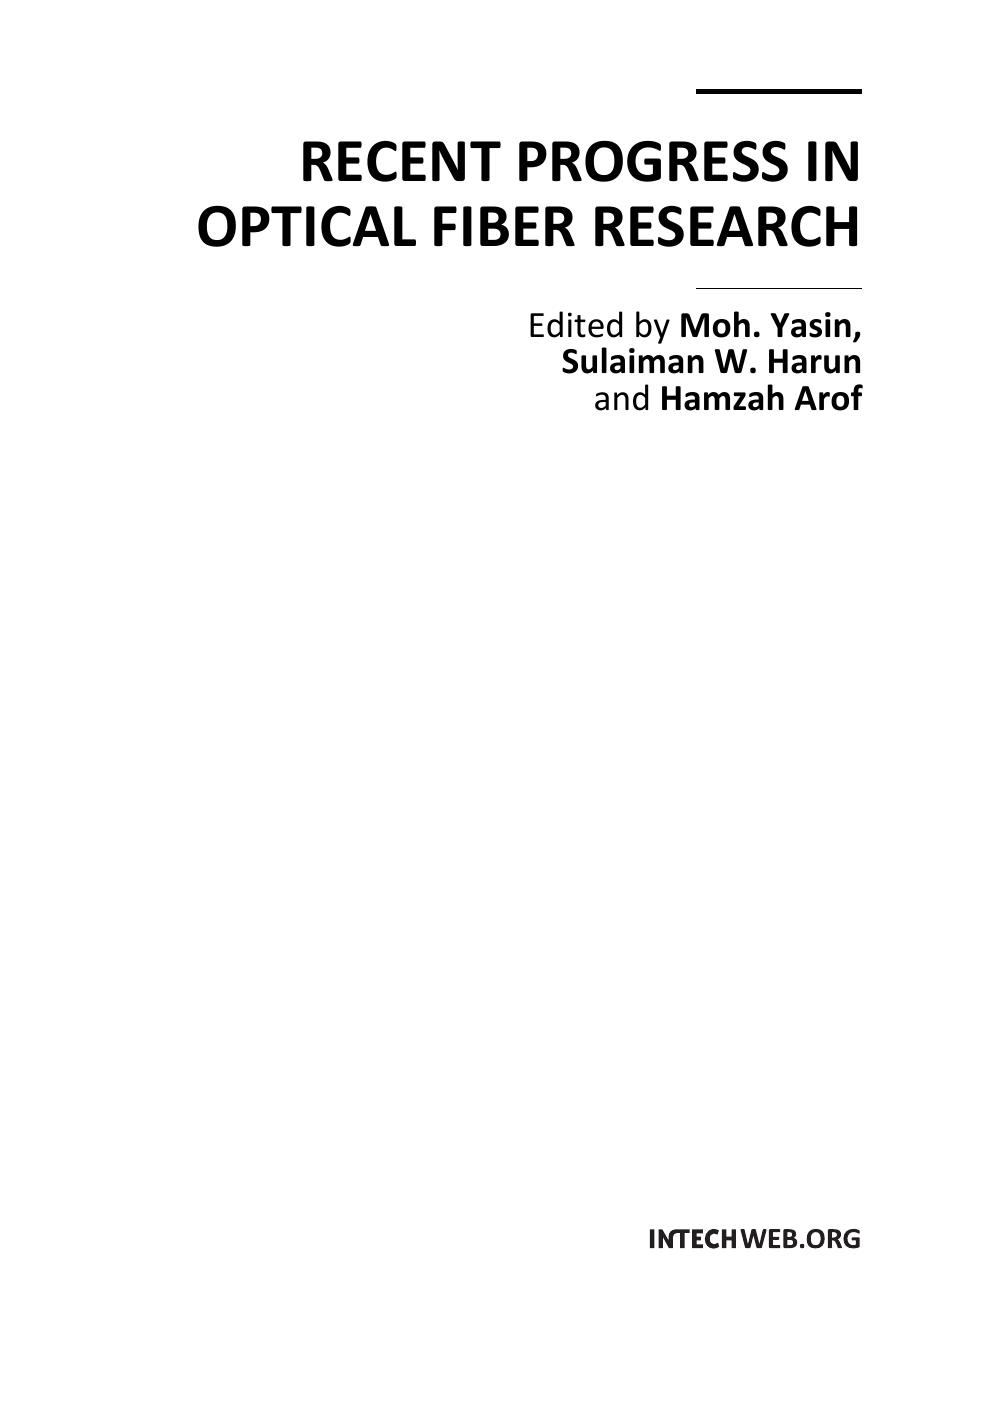 Recent Progress in Optical Fiber Research